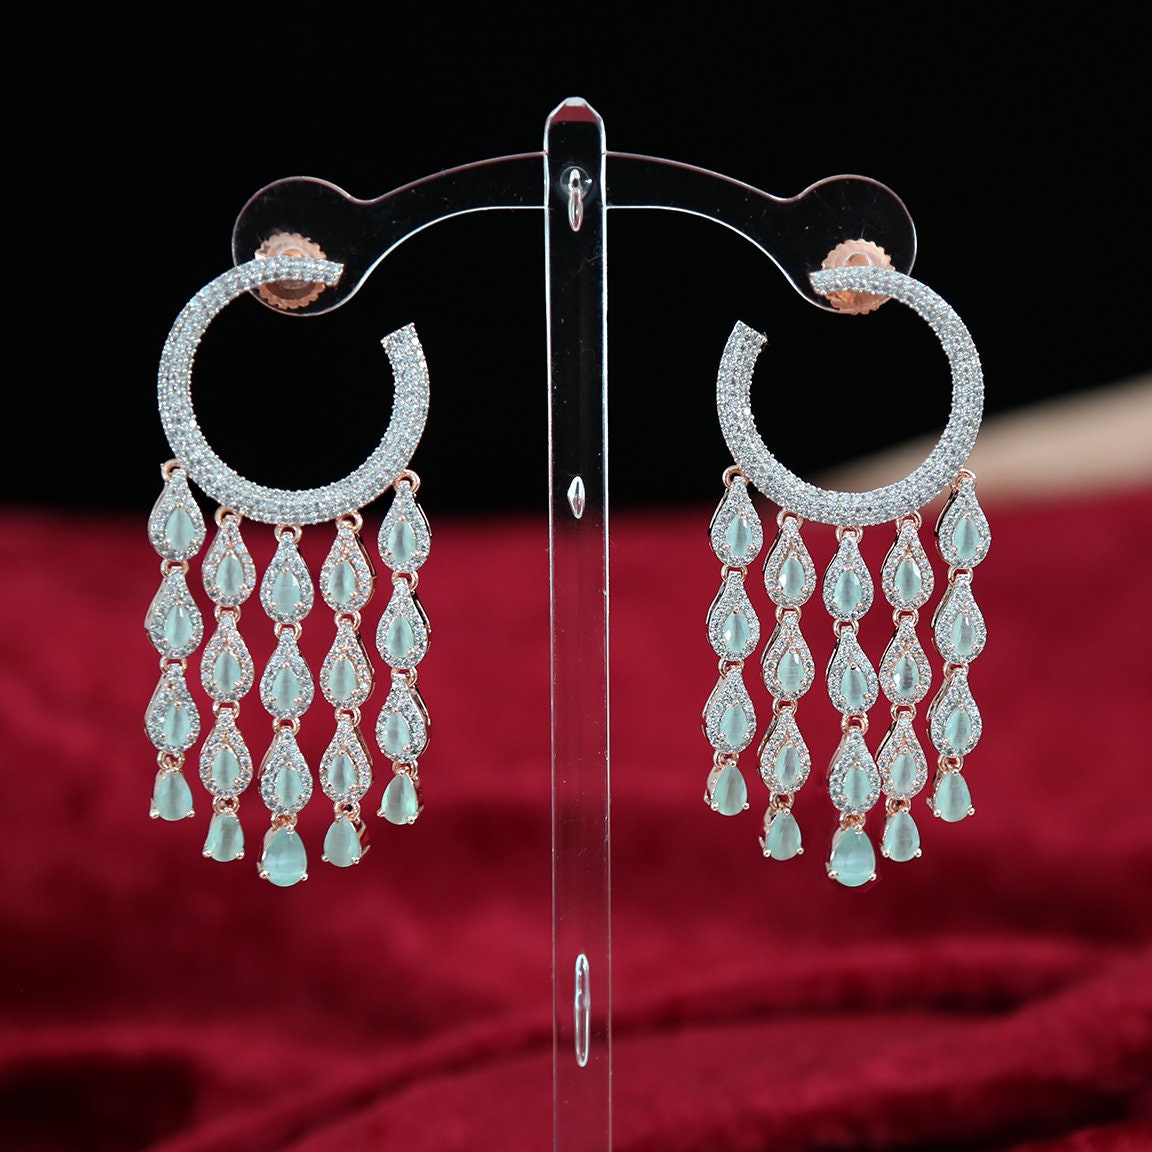 Buy Earrings Online | Daisy Diamond Stud Earrings from Indeevari